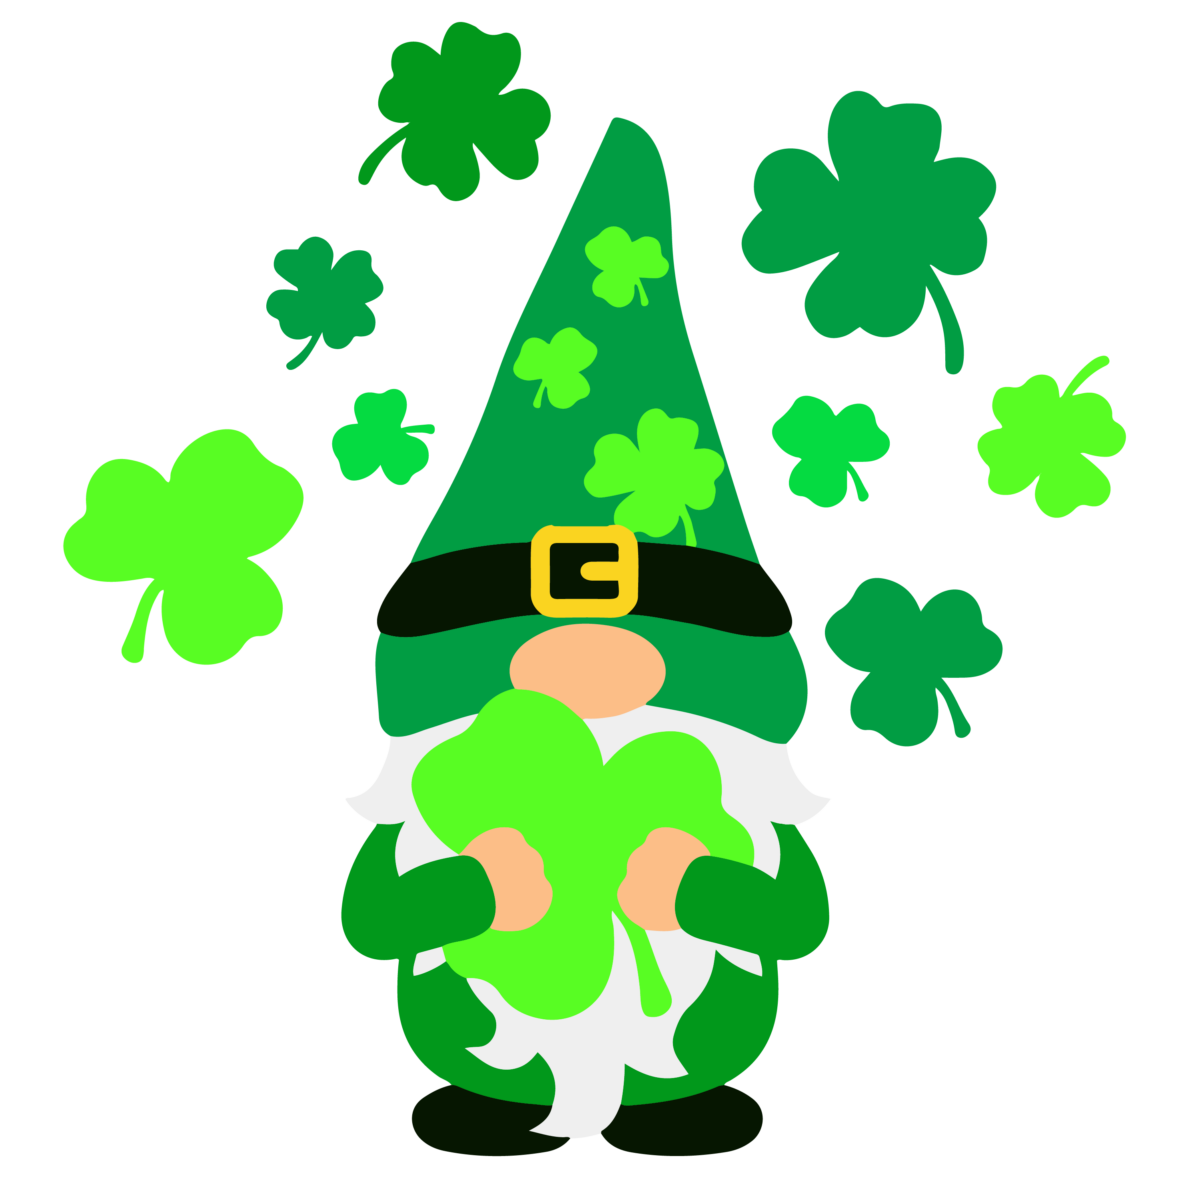 St Patricks Day Gnomes SVG